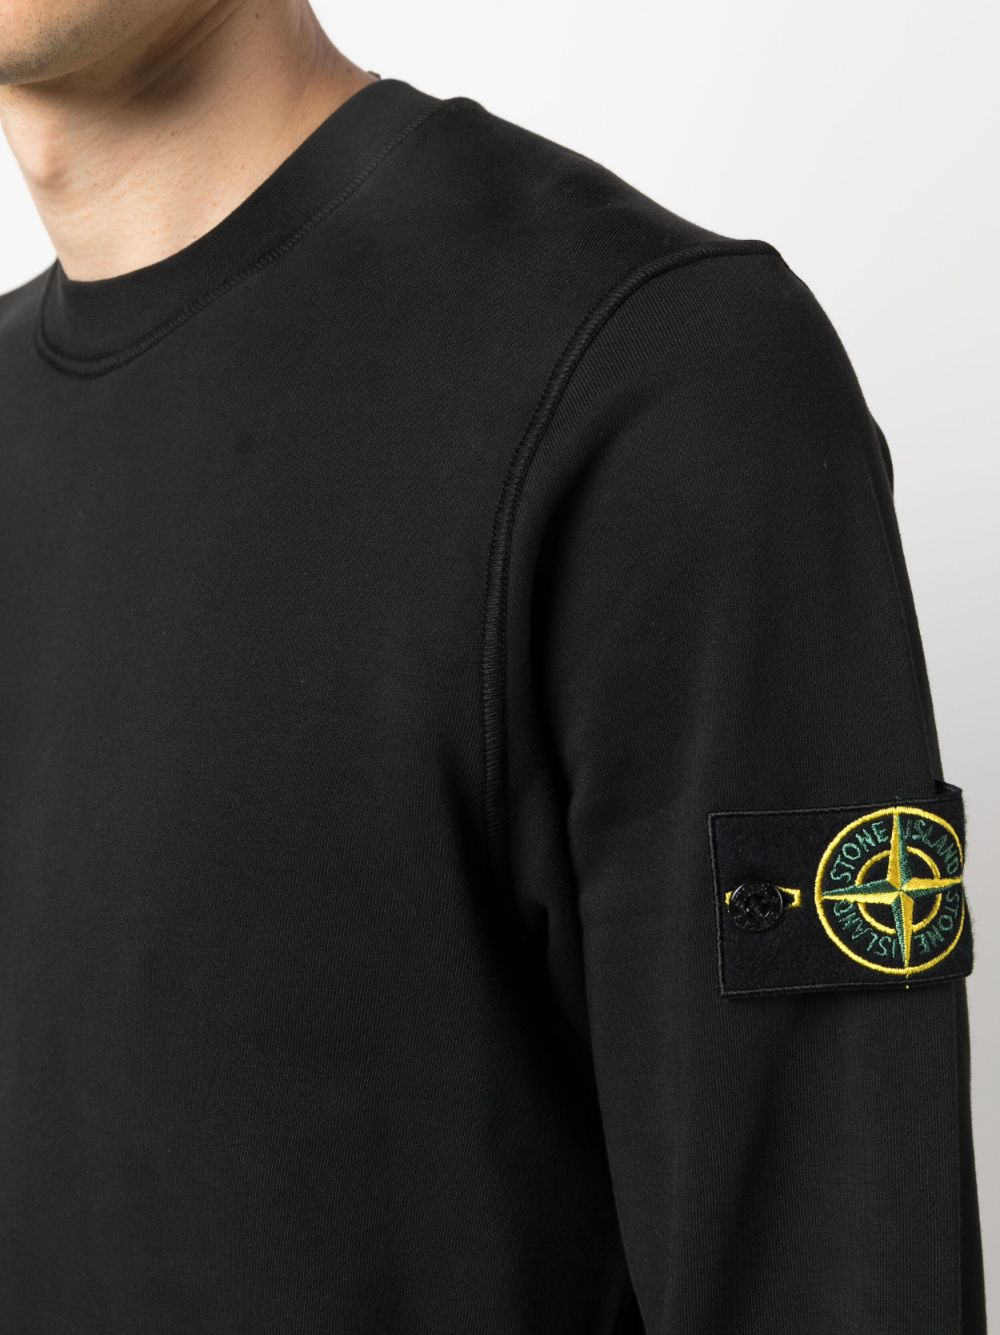 Stone Island Compass Patch Crew neck Sweatshirt in Black